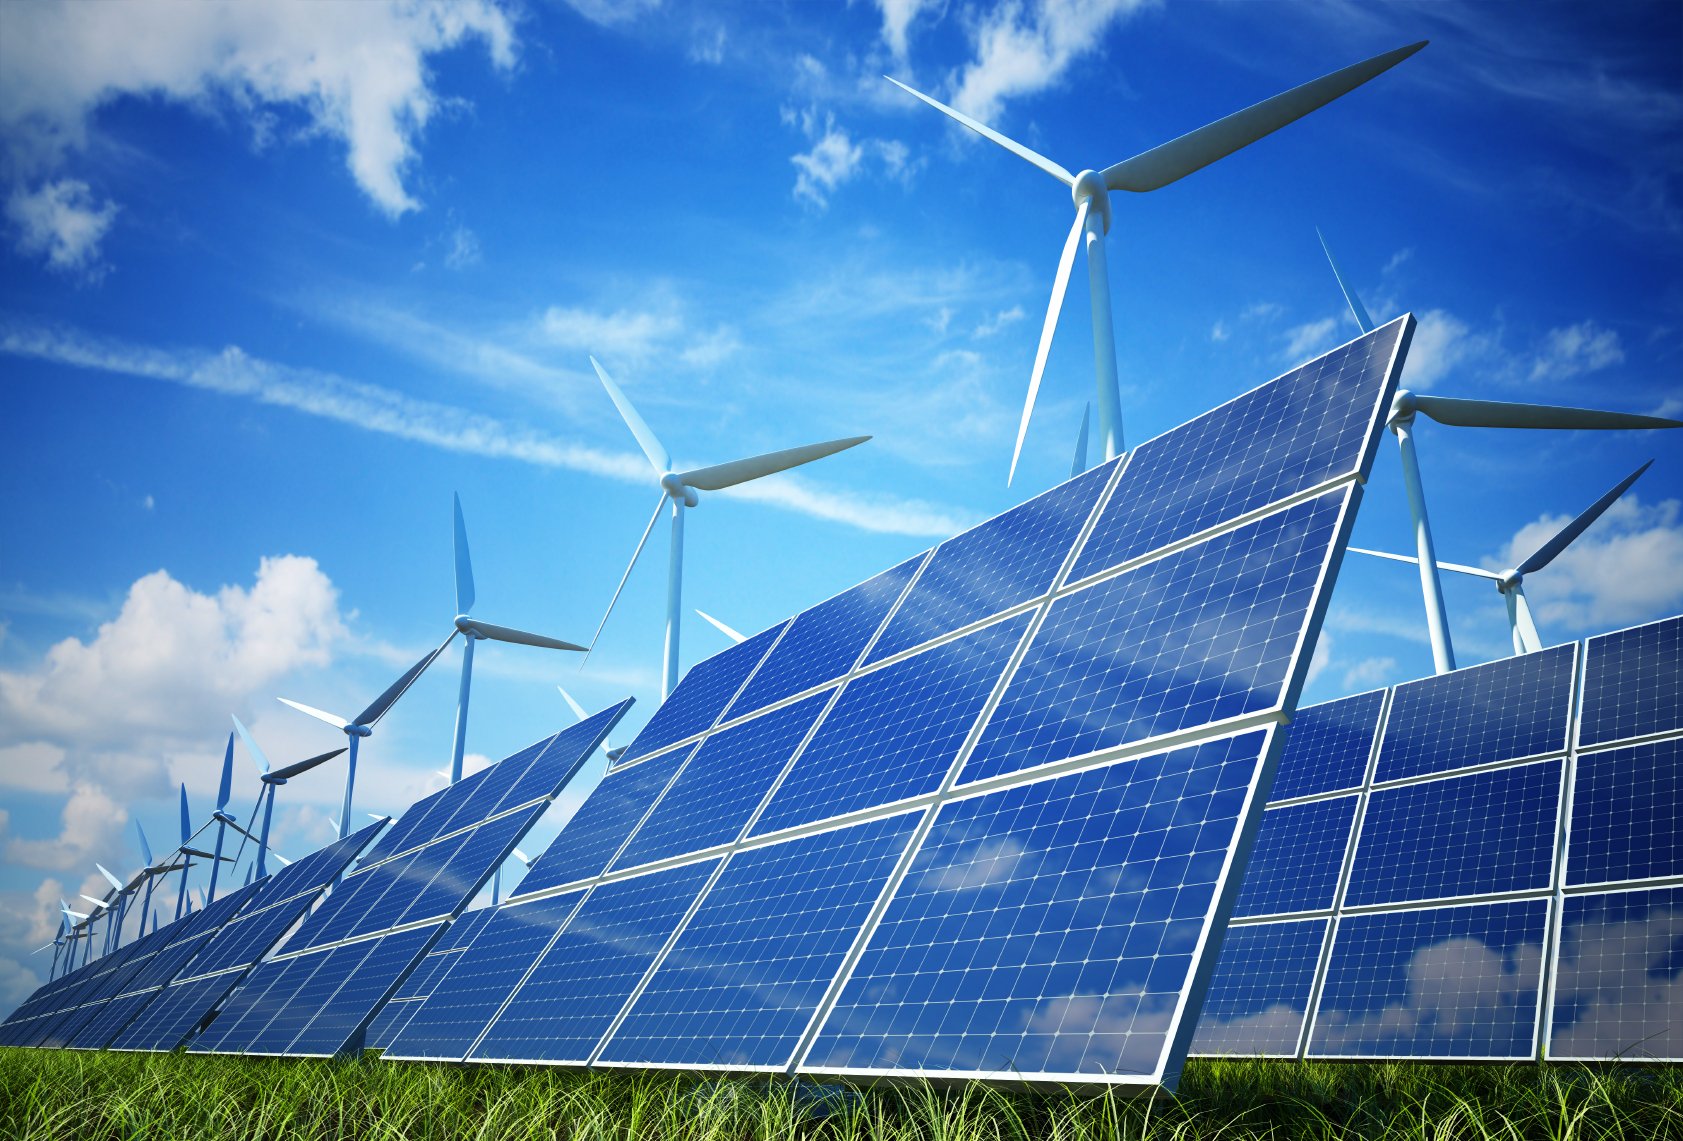 More information about "Αιτήσεις για 380 MW αιολικών και 240 MW φωτοβολταϊκών υπέβαλλαν οι επενδυτές – «Μένουν» 250 MW για νέο διαγωνισμό"